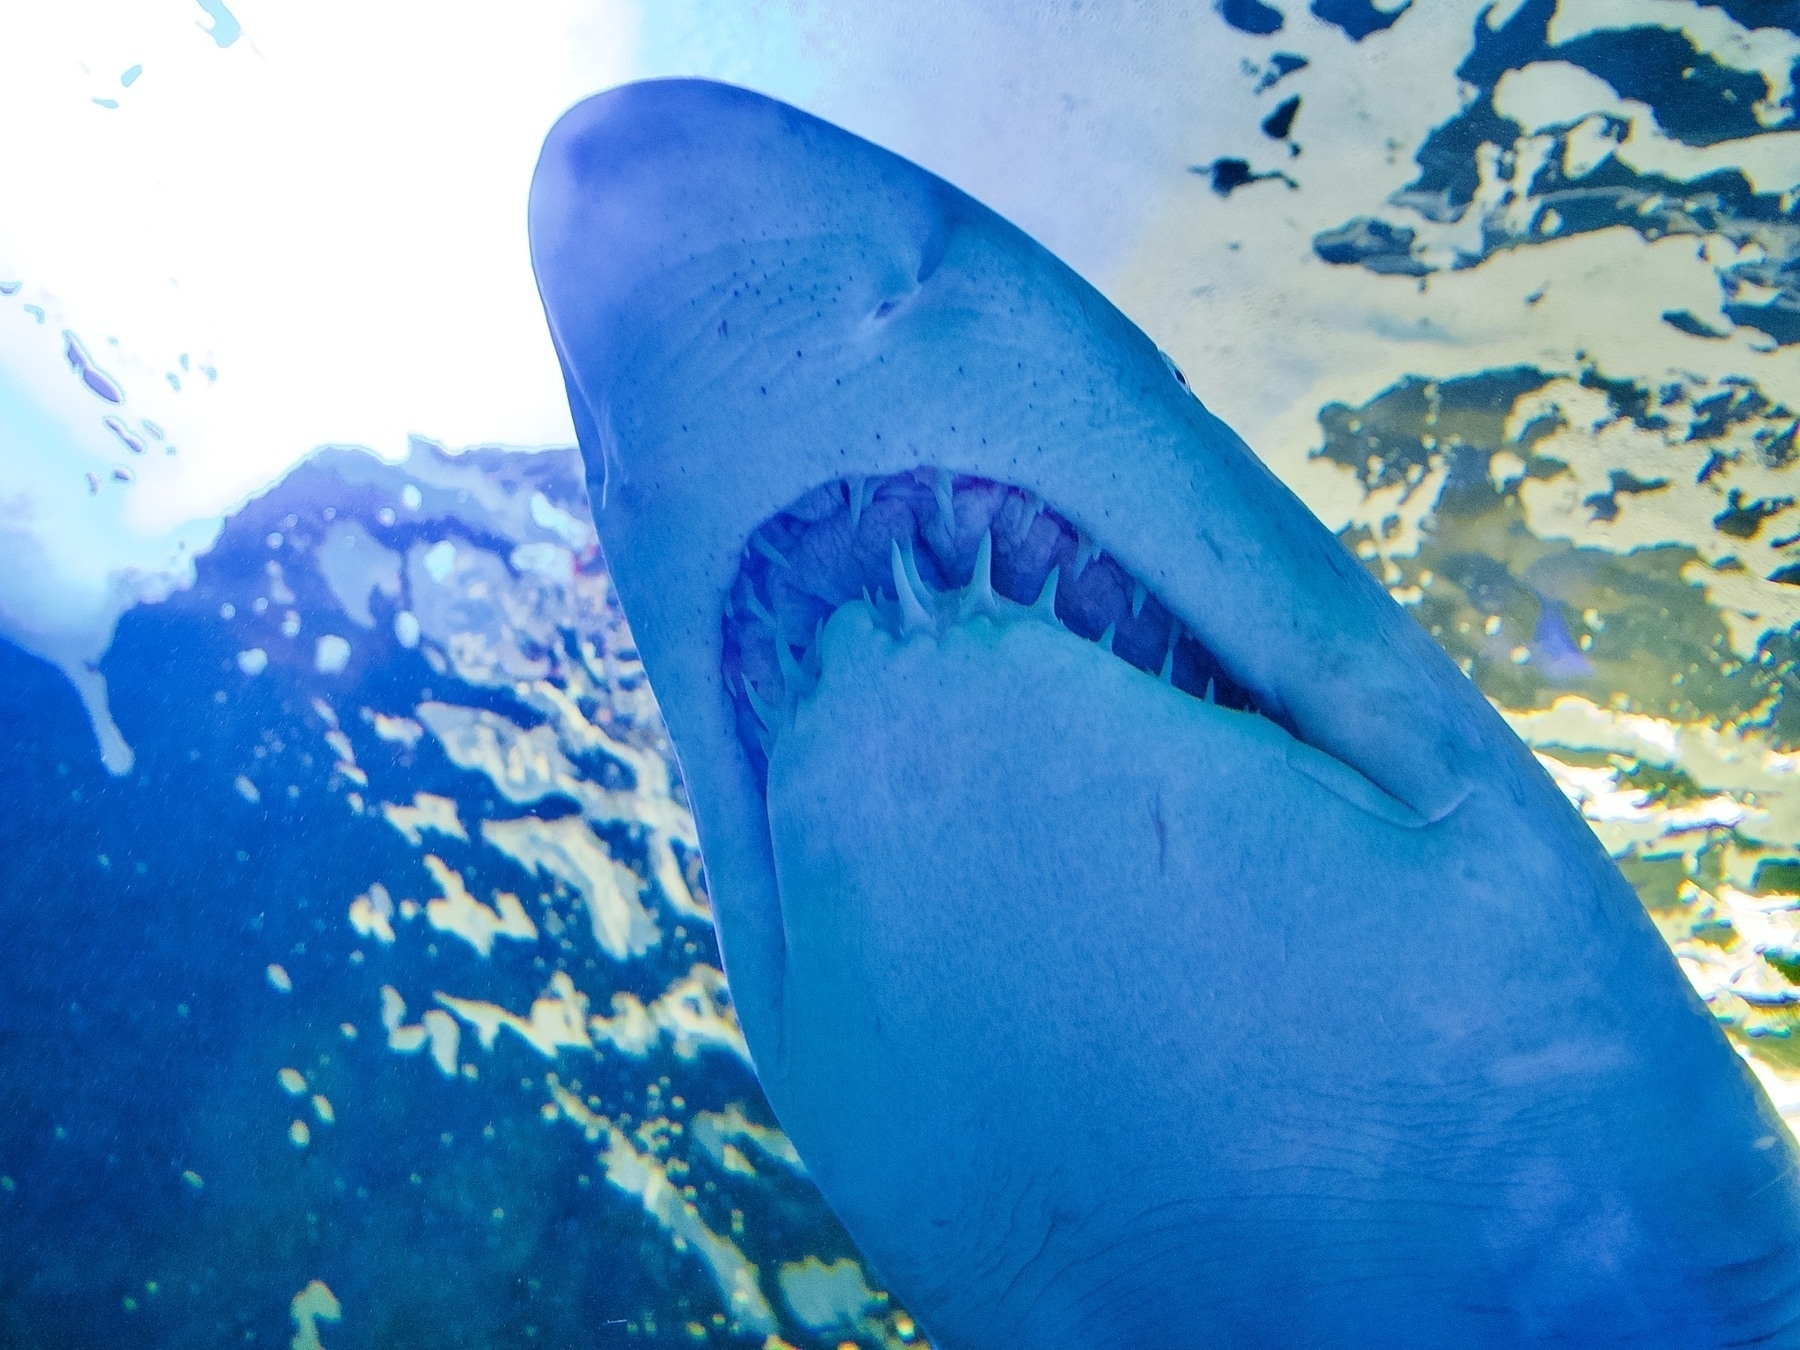 A close-up of a shark's head and sharp teeth